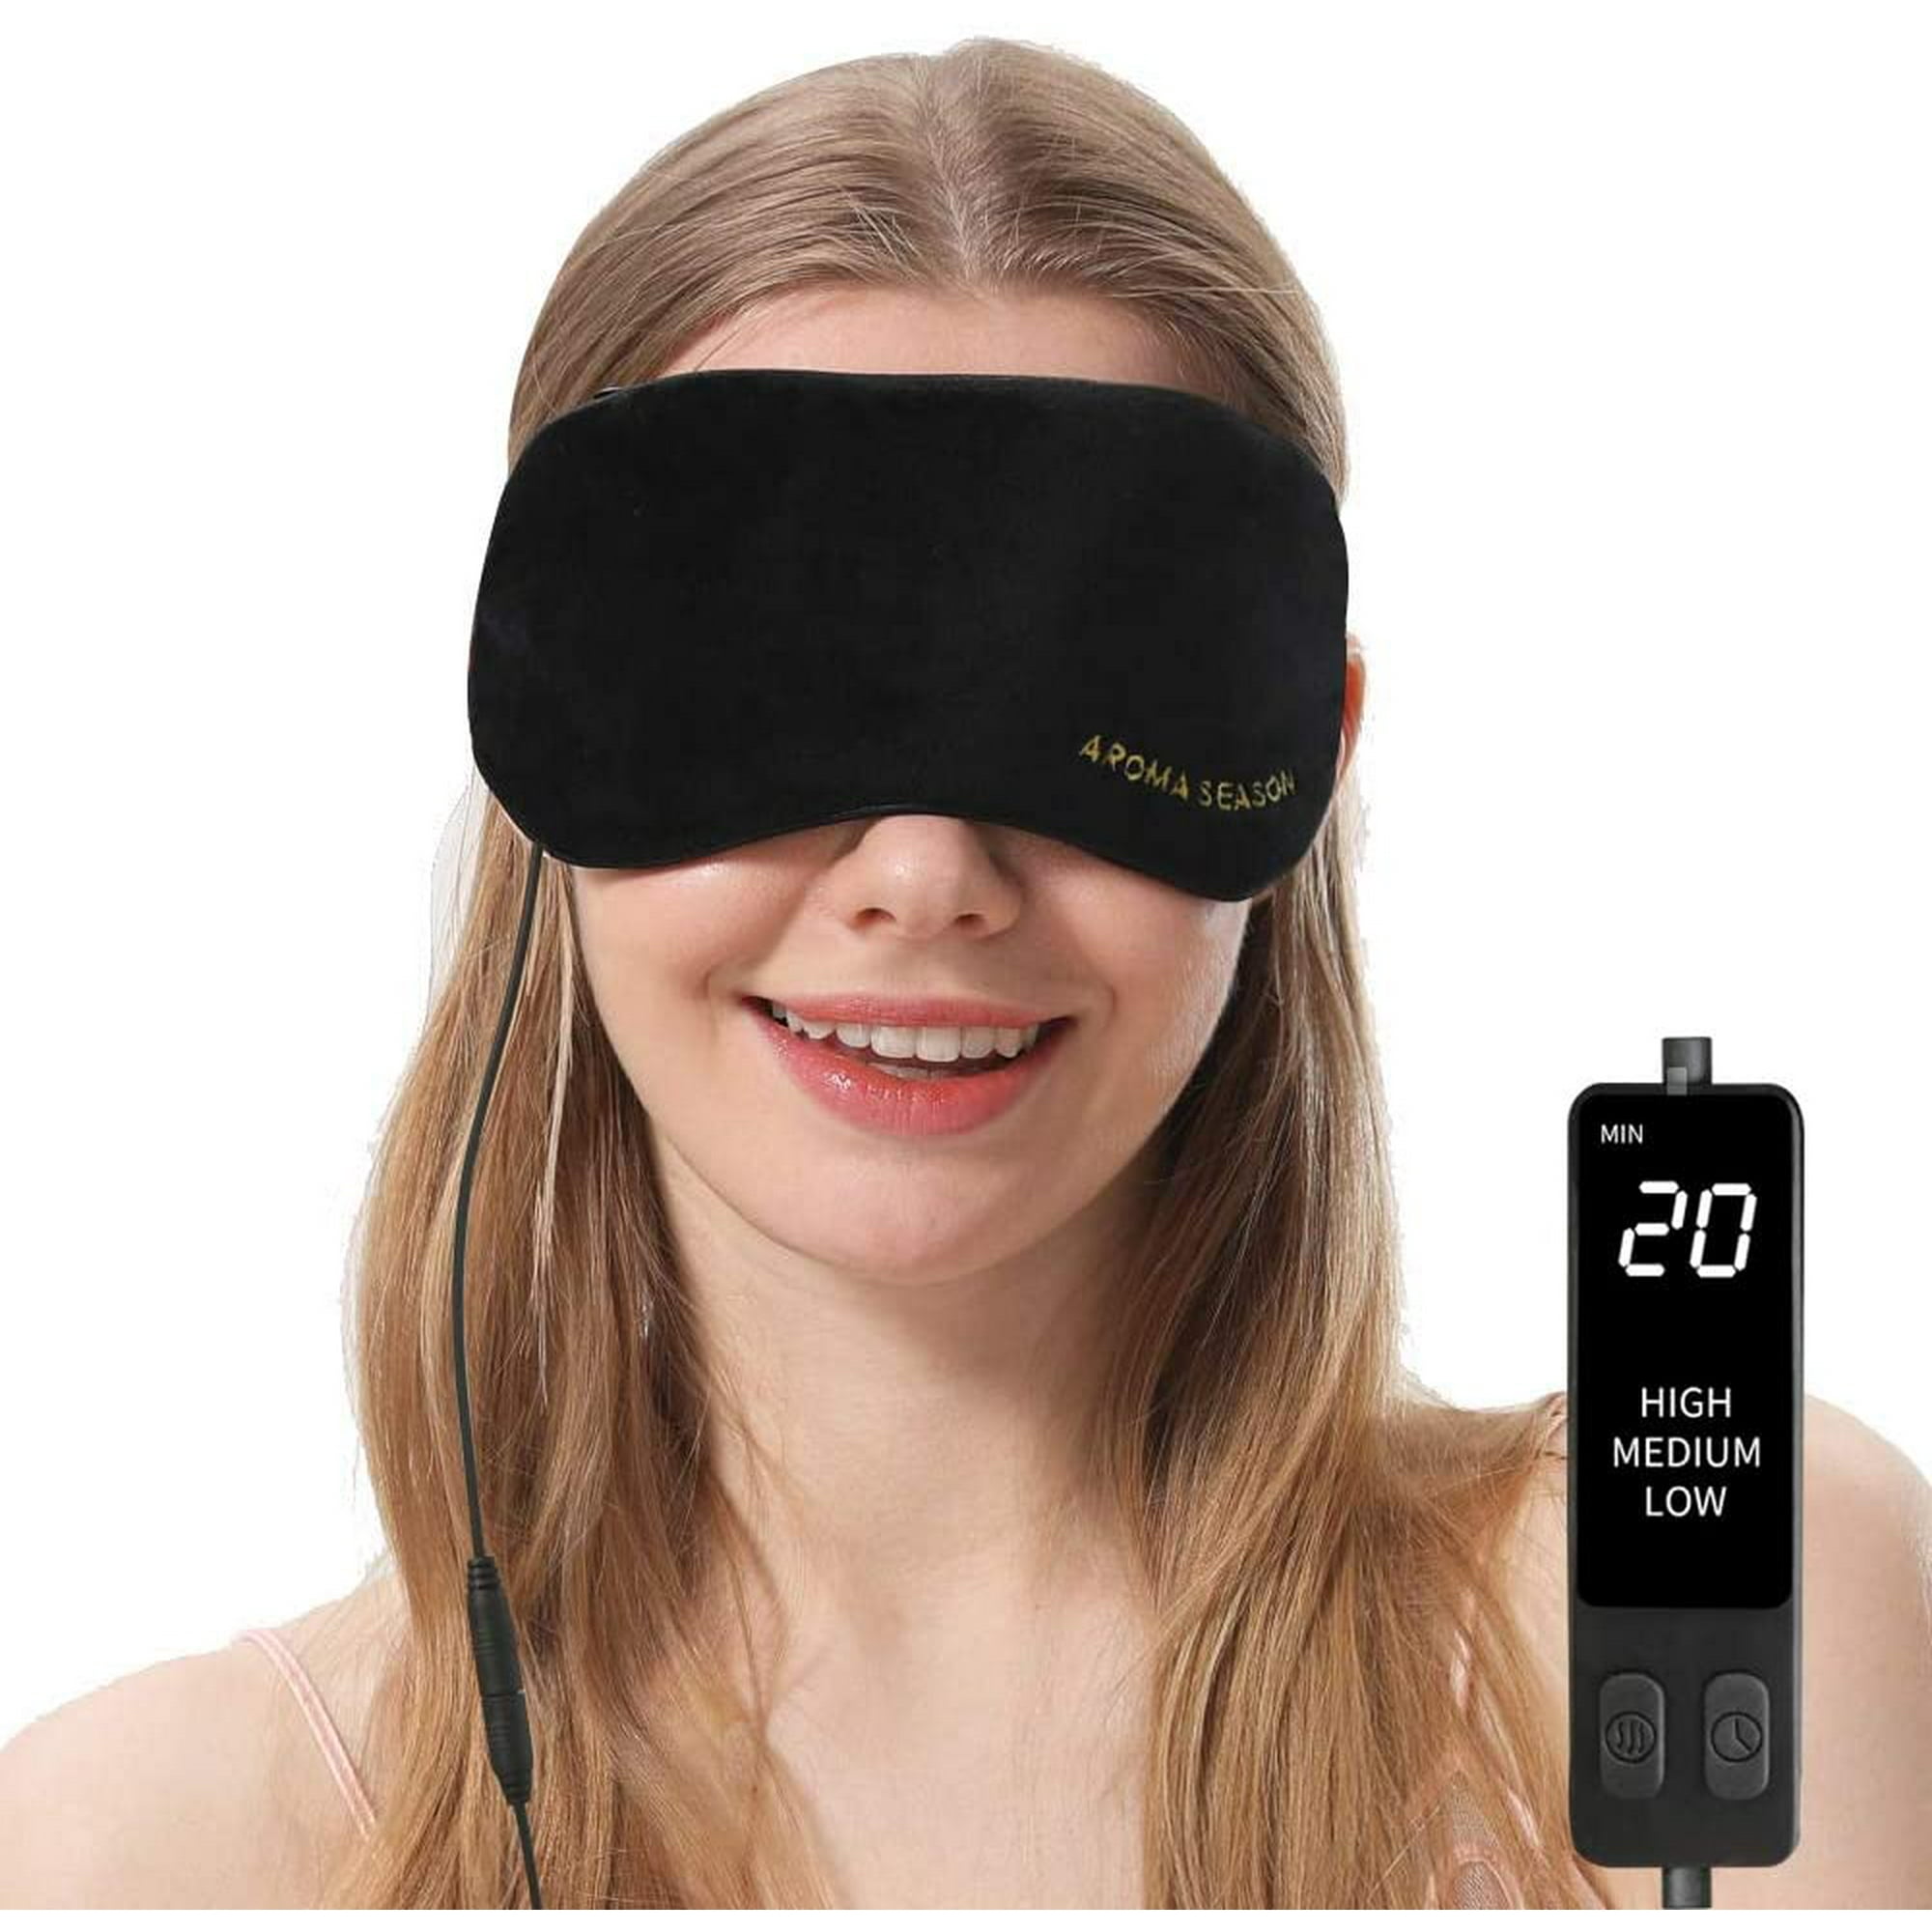 Usb Steam Eye Mask To Relieve Eye Stress Warm Treatment For Dry Eye Blepharitis Styes Black Walmart Canada